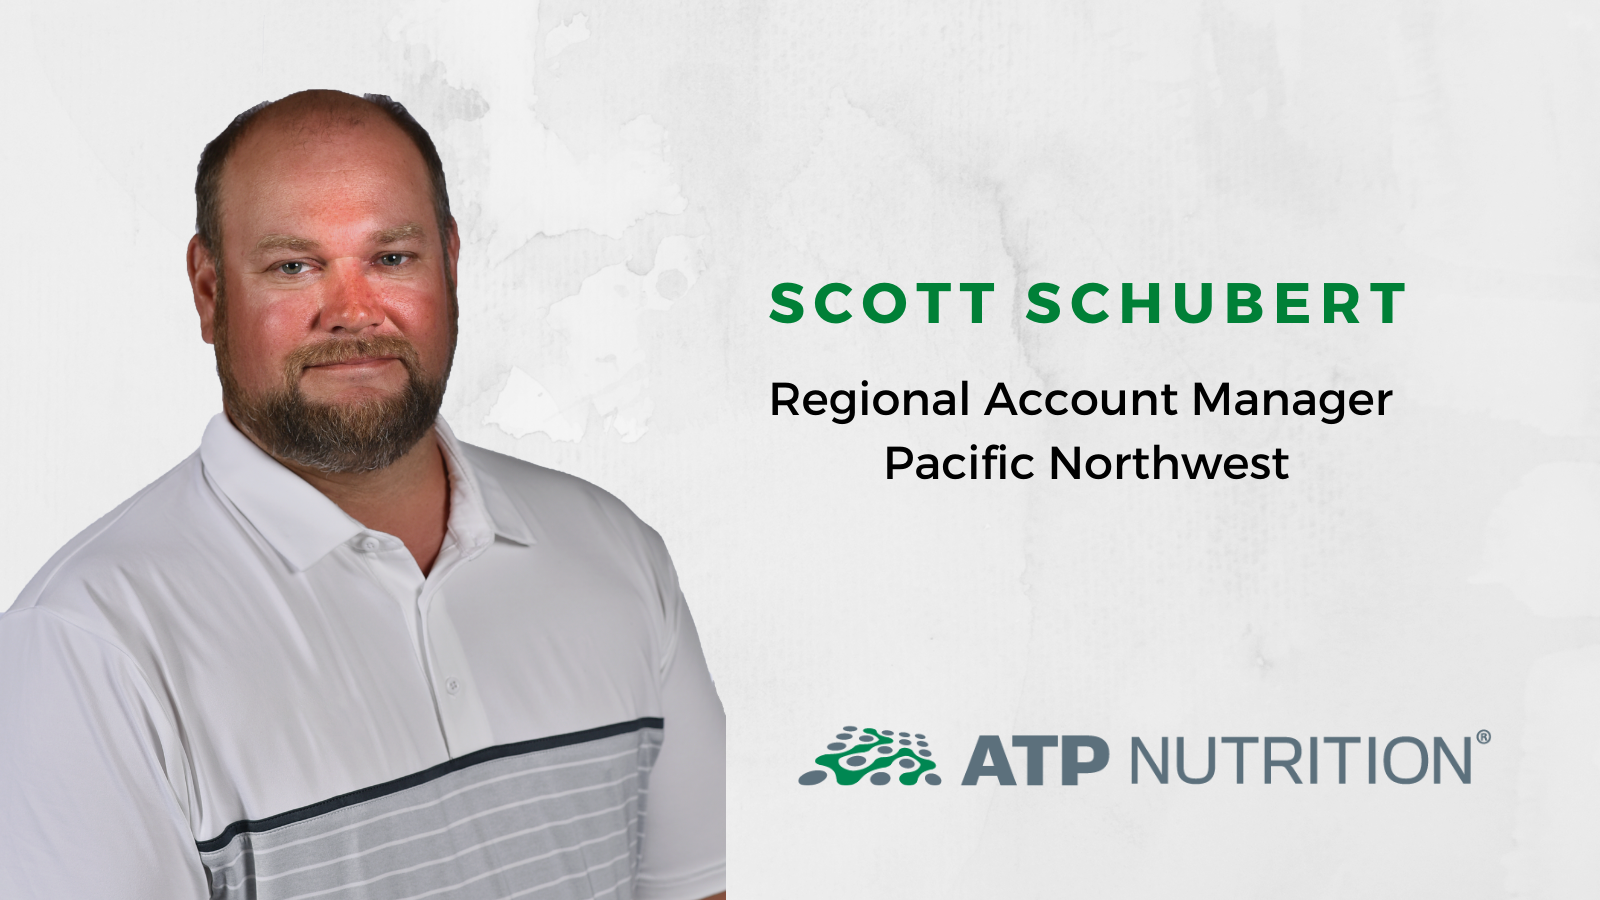 ATP Nutrition welcomes Scott Schubert to the team